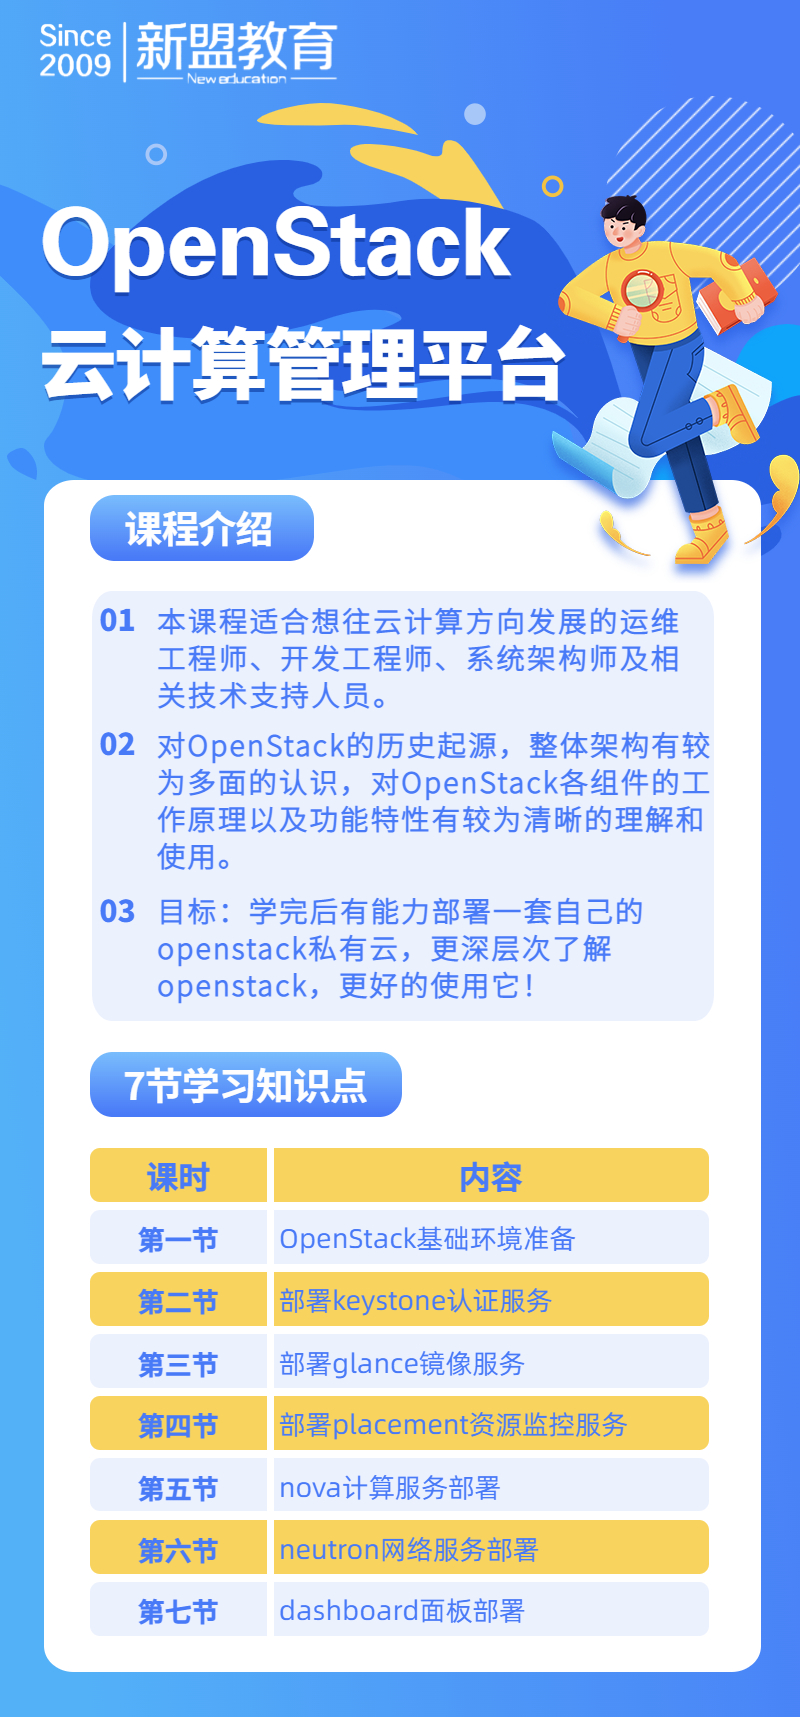 OpenStack云计算管理平台-长图.jpg